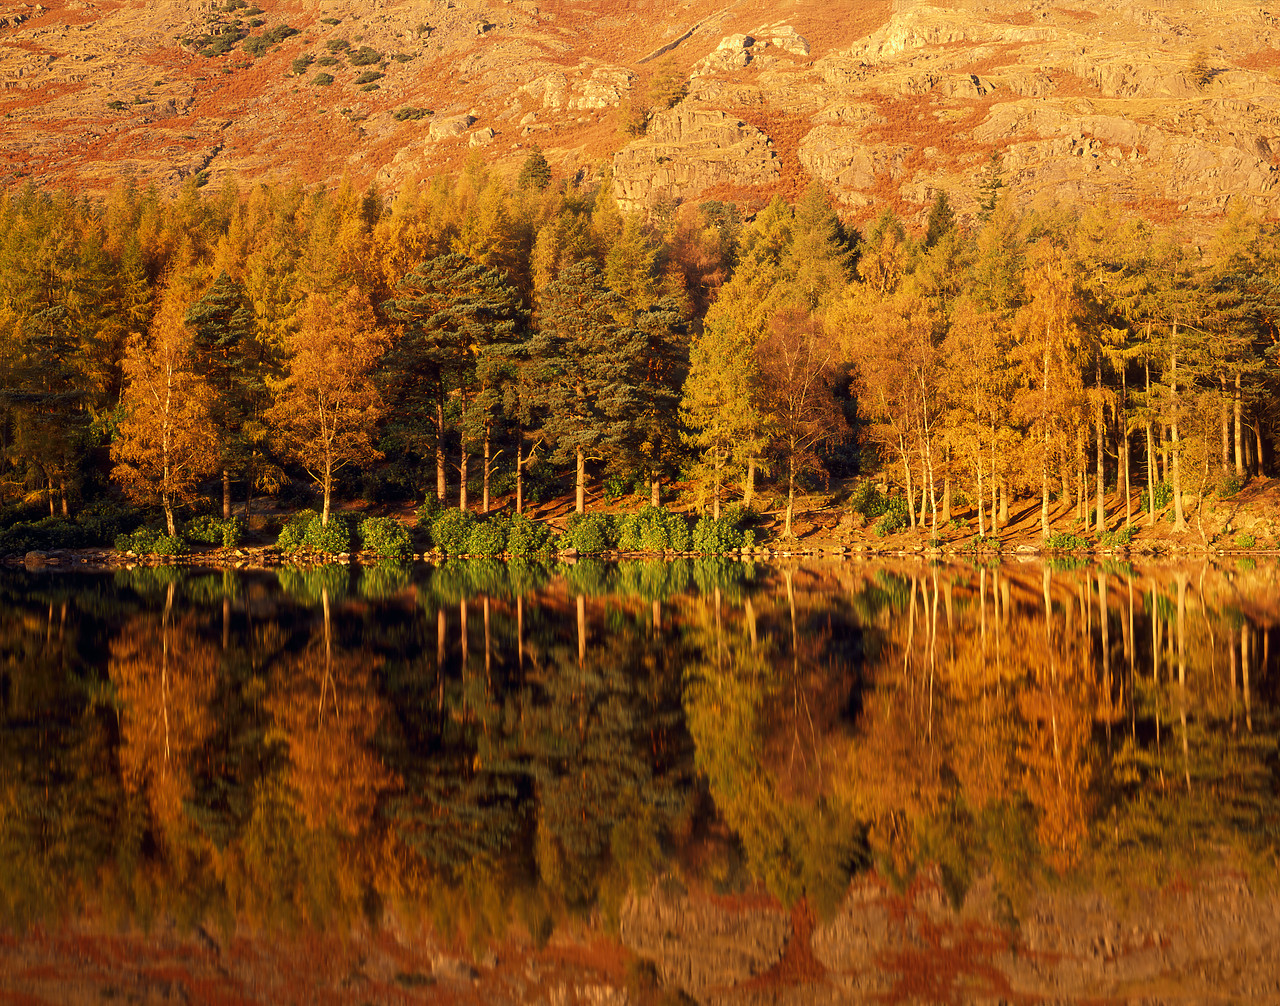 #970499-1 - Blea Tarn Reflections, Lake District National Park, Cumbria, England